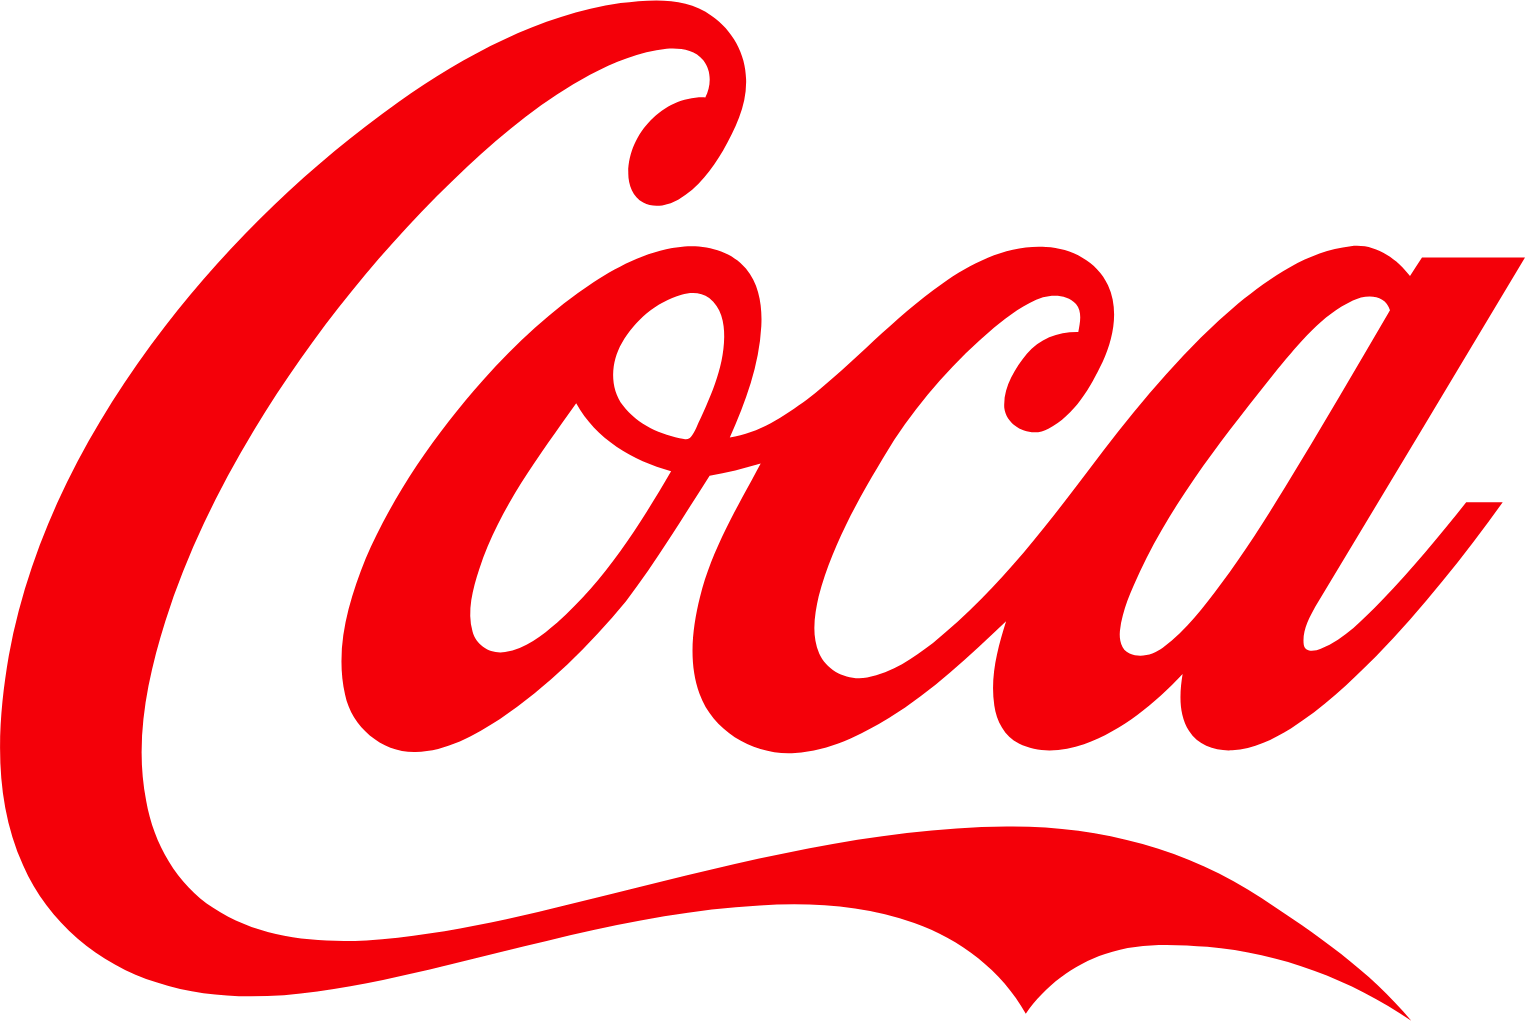 Coca-Cola  Coca-Cola European Partners